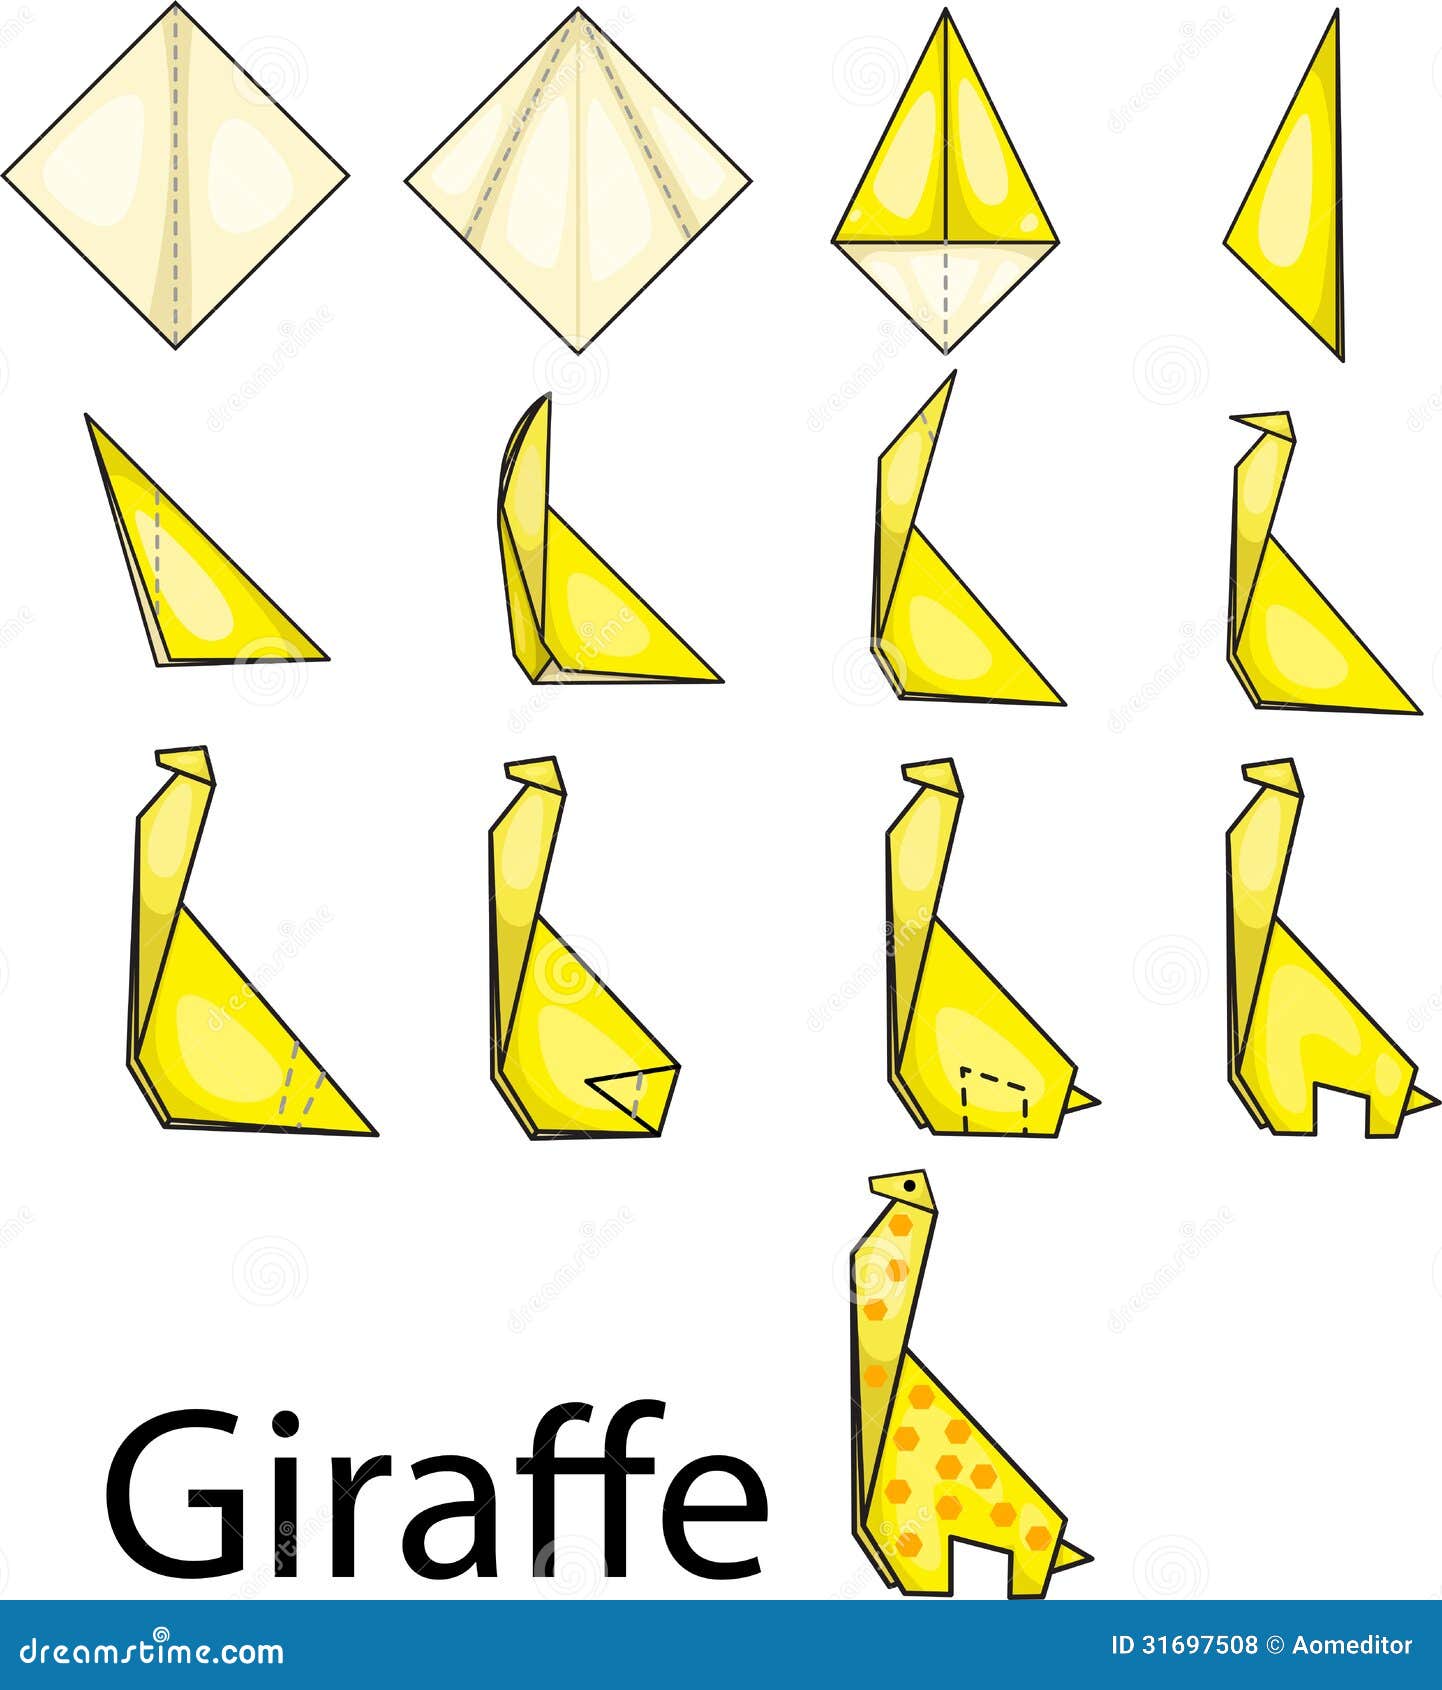 Origami giraffe stock vector. Illustration of design - 31697508